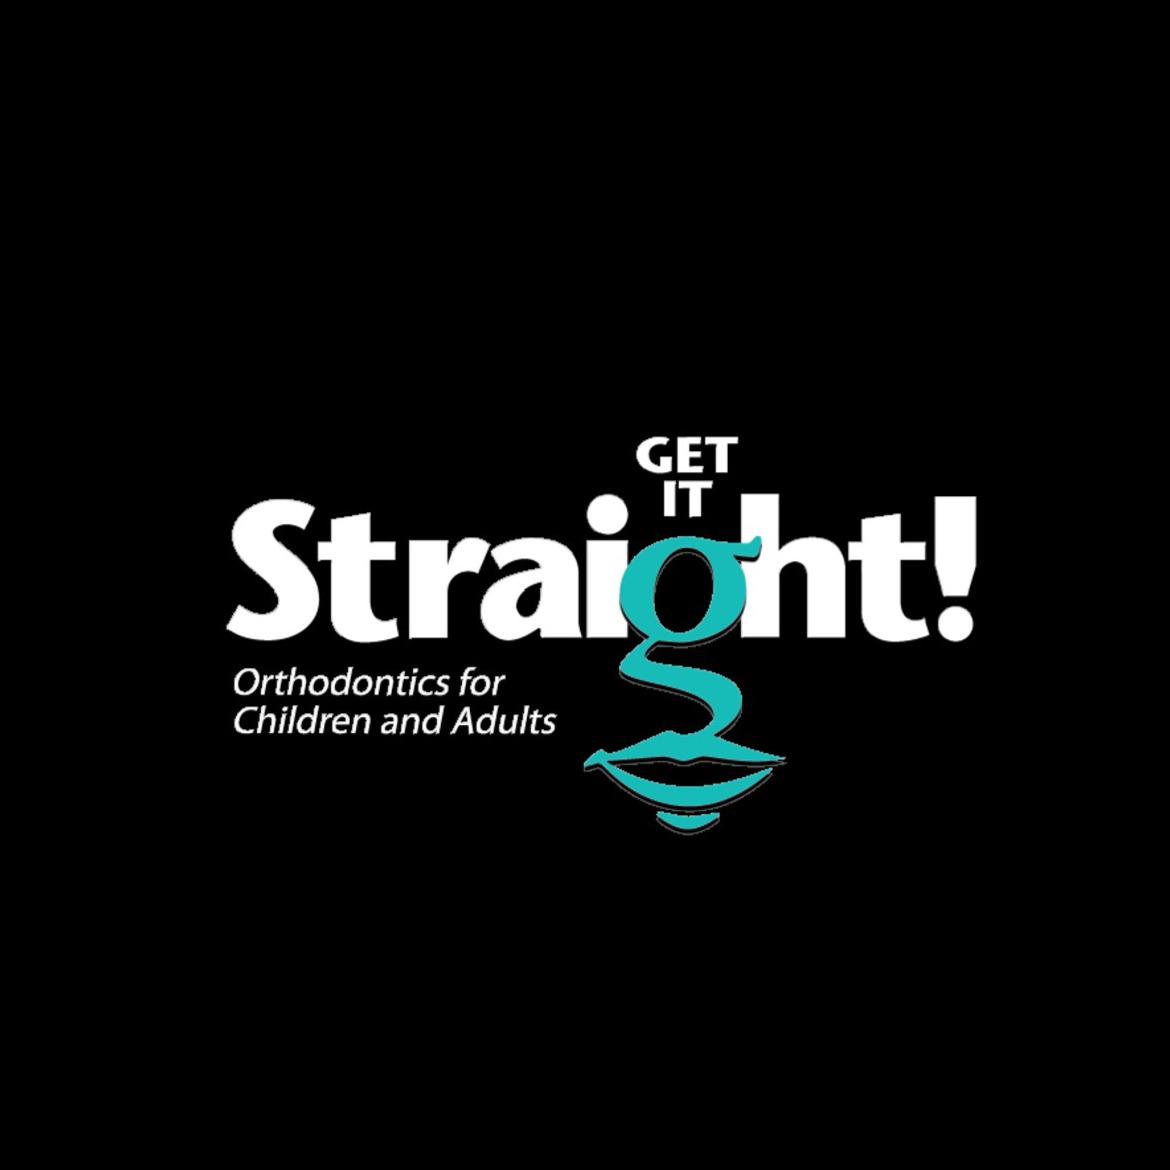 Get It Straight Orthodontics Get It Straight Orthodontics Macedon (315)986-5800